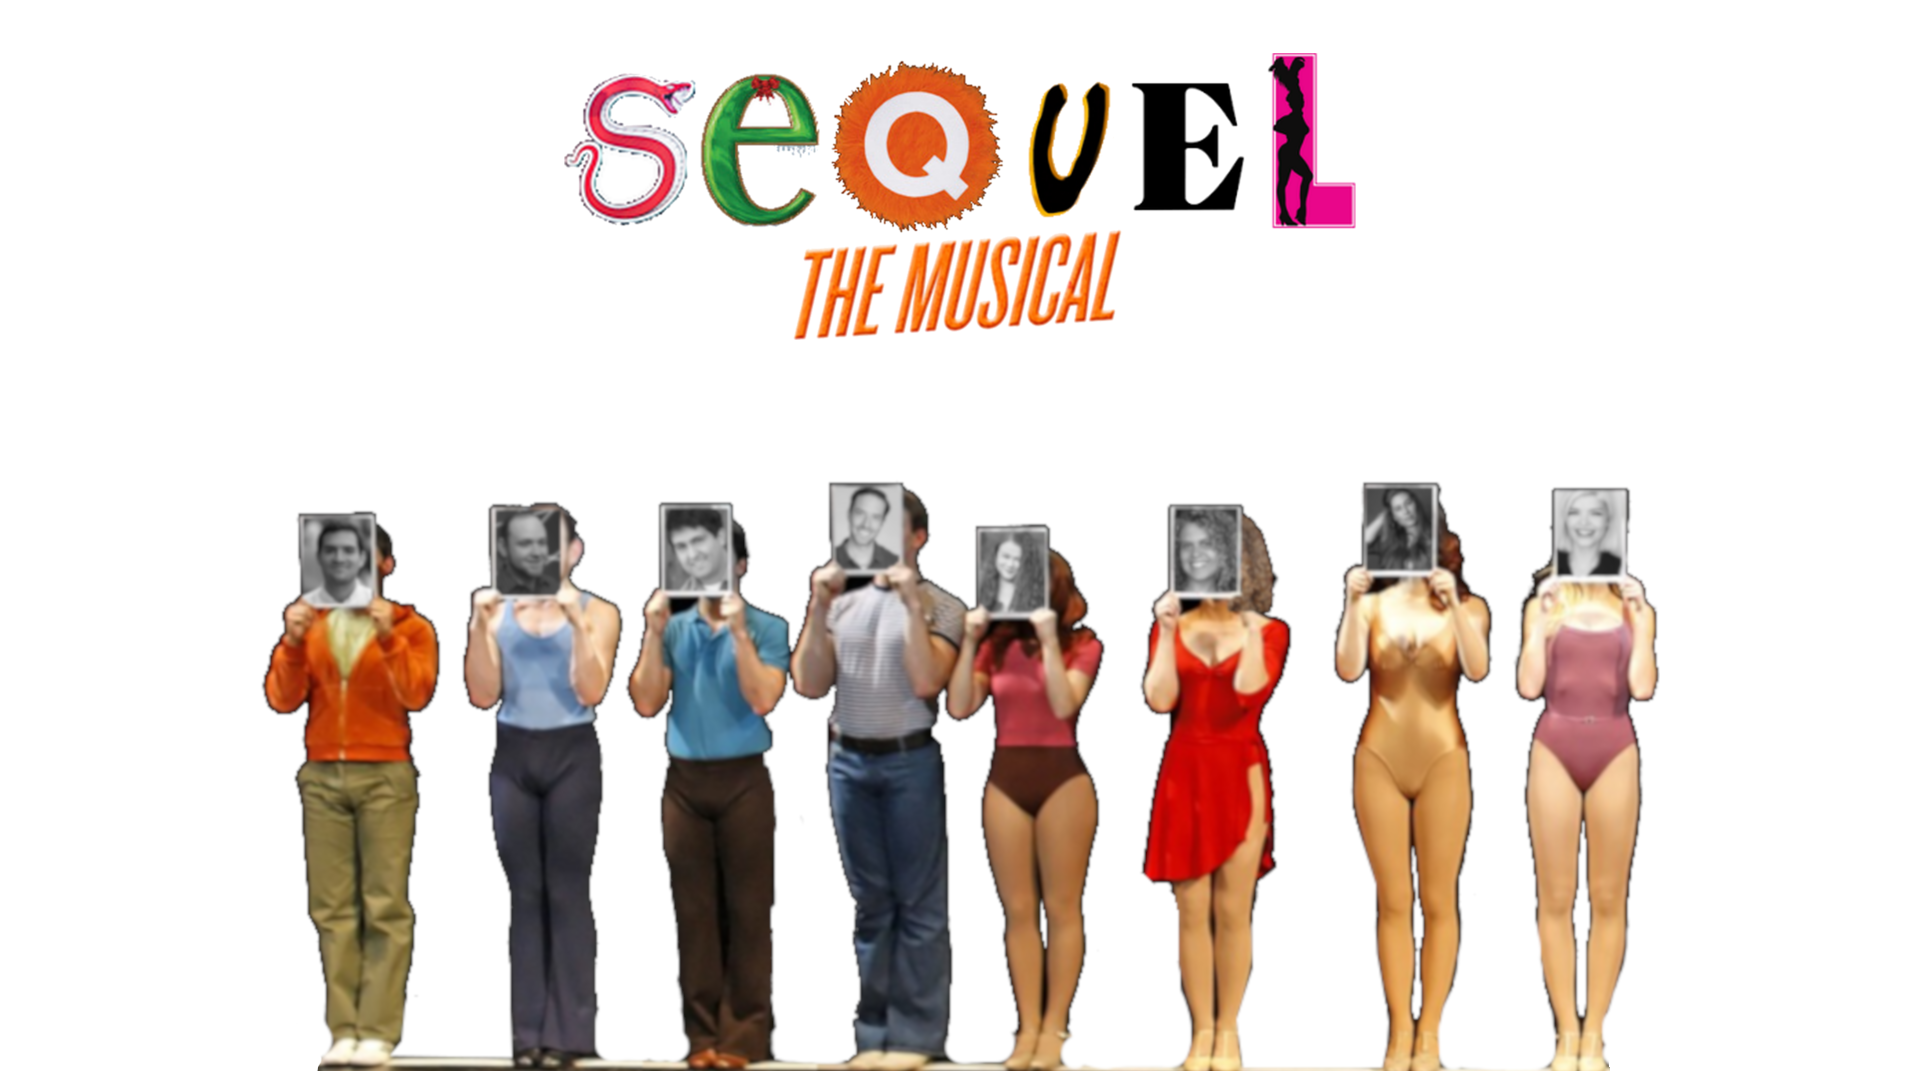 Sequel: The Musical